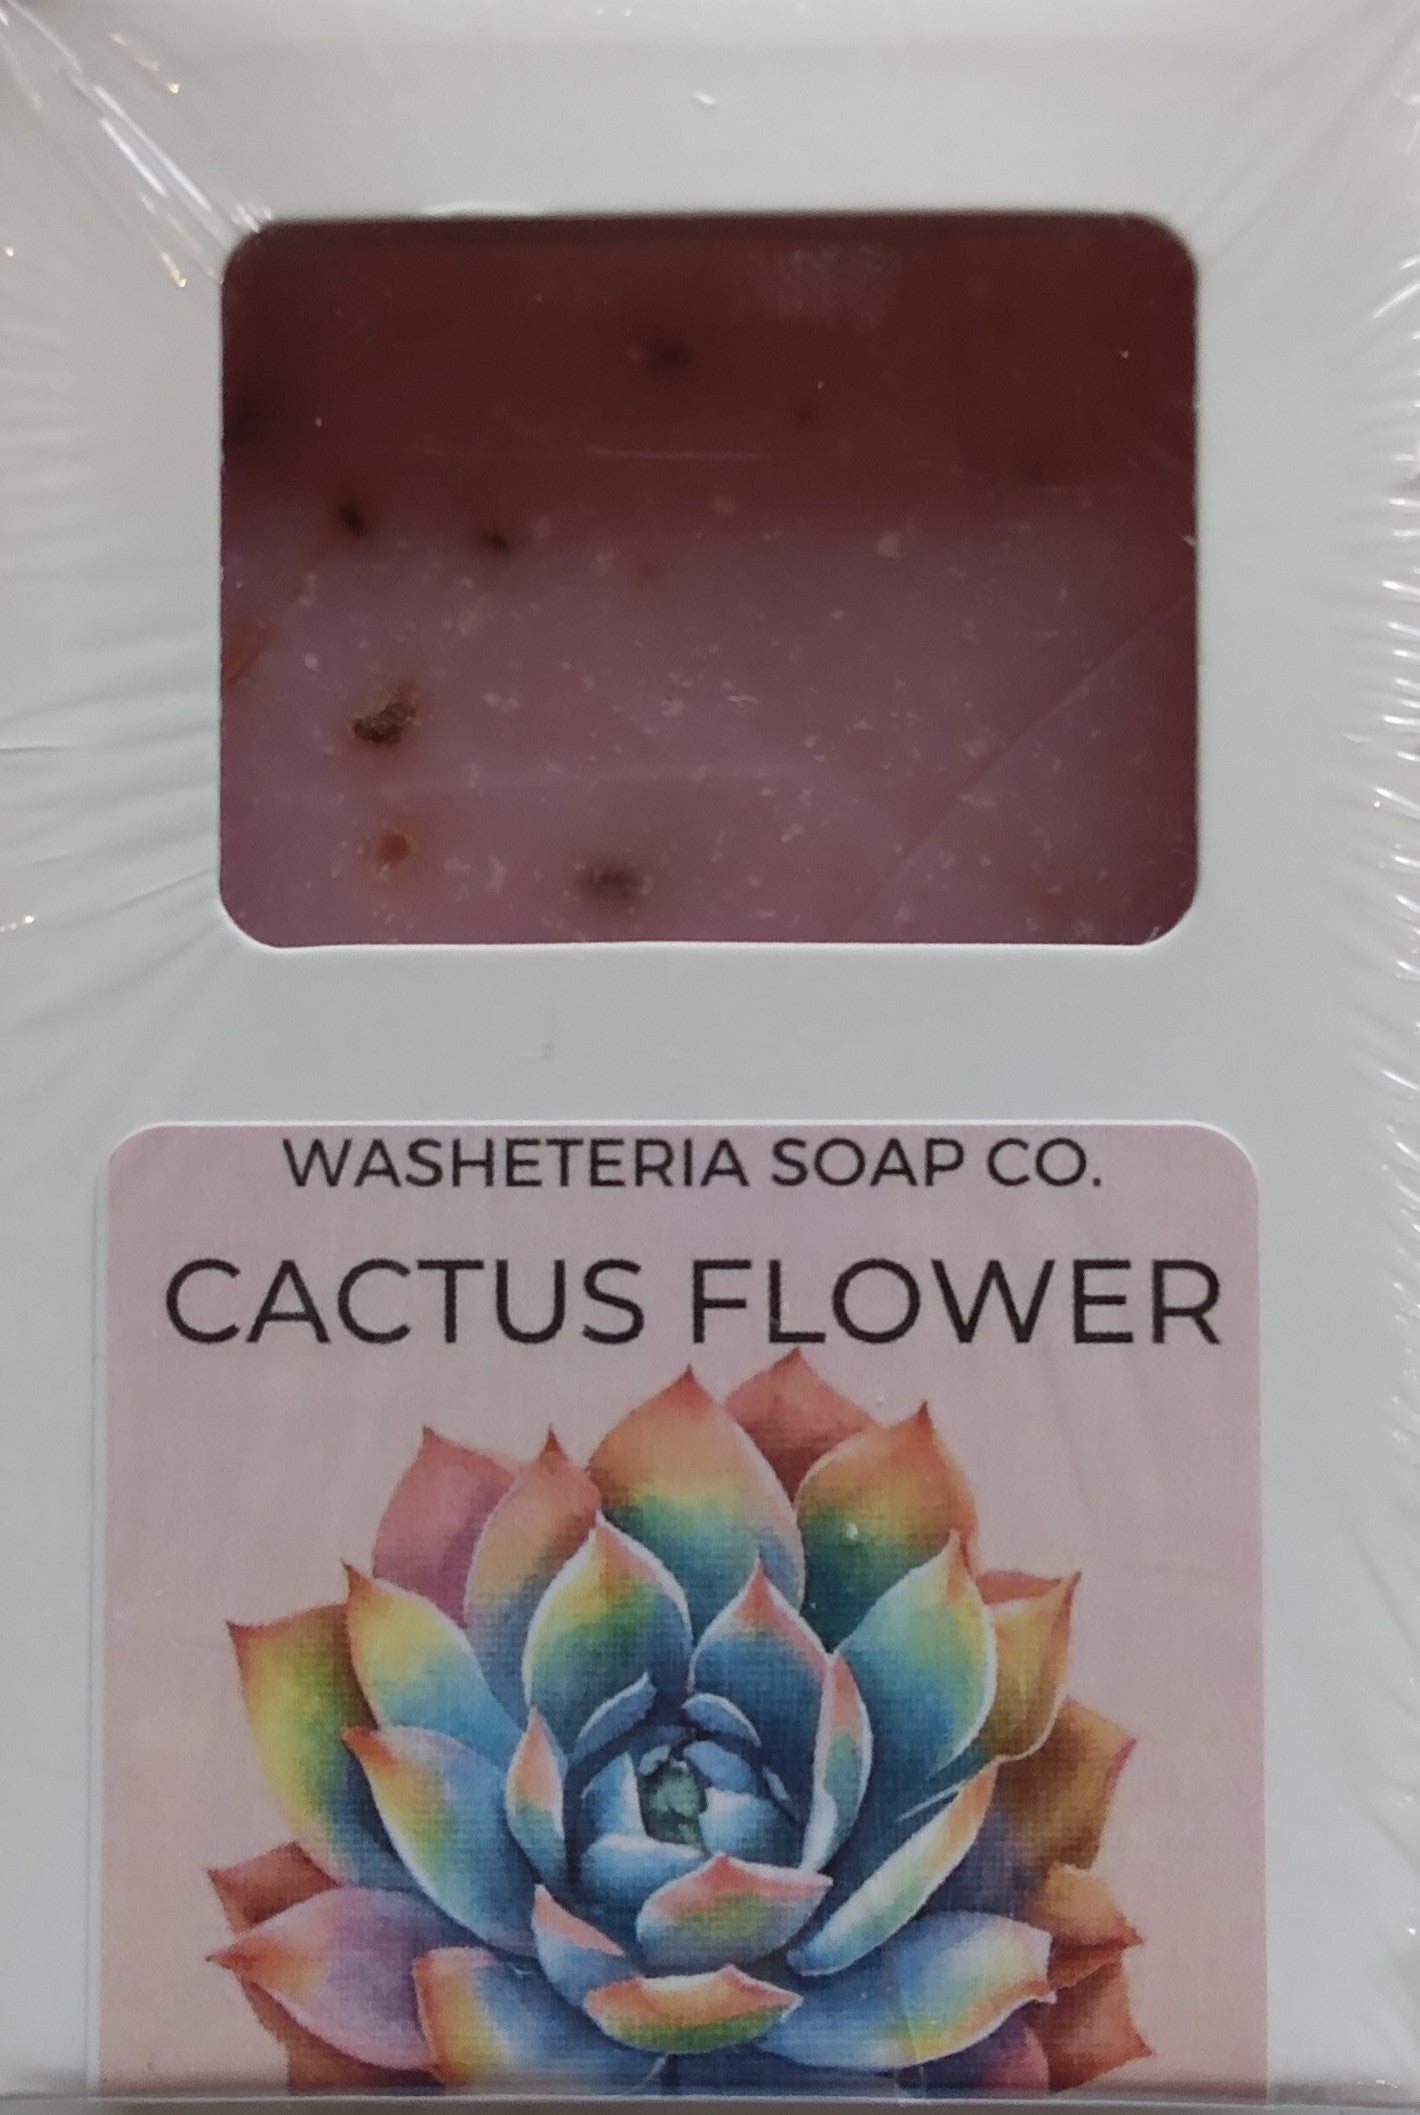 Washeteria Soap Co. - Cactus Flower Soap